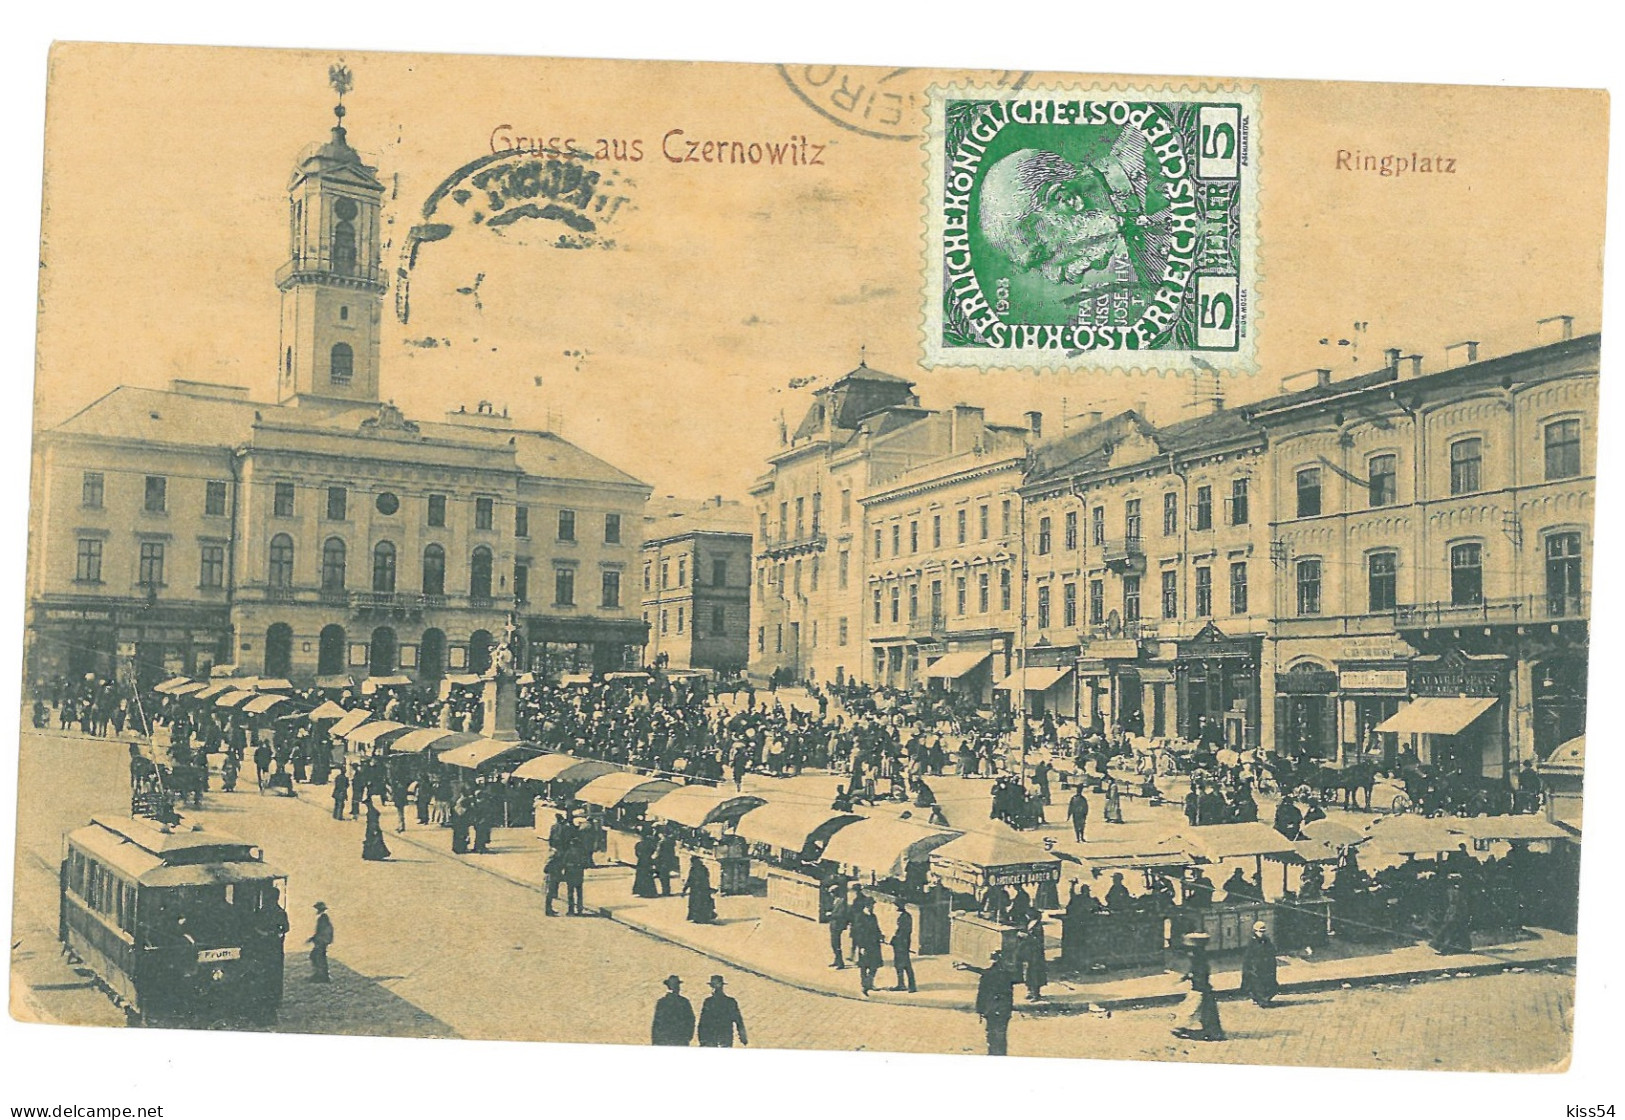 UK 63 - 17905 CERNOWICZ, Bukowina, Market, Ukraine - Old Postcard - Used - 1909 - Ukraine